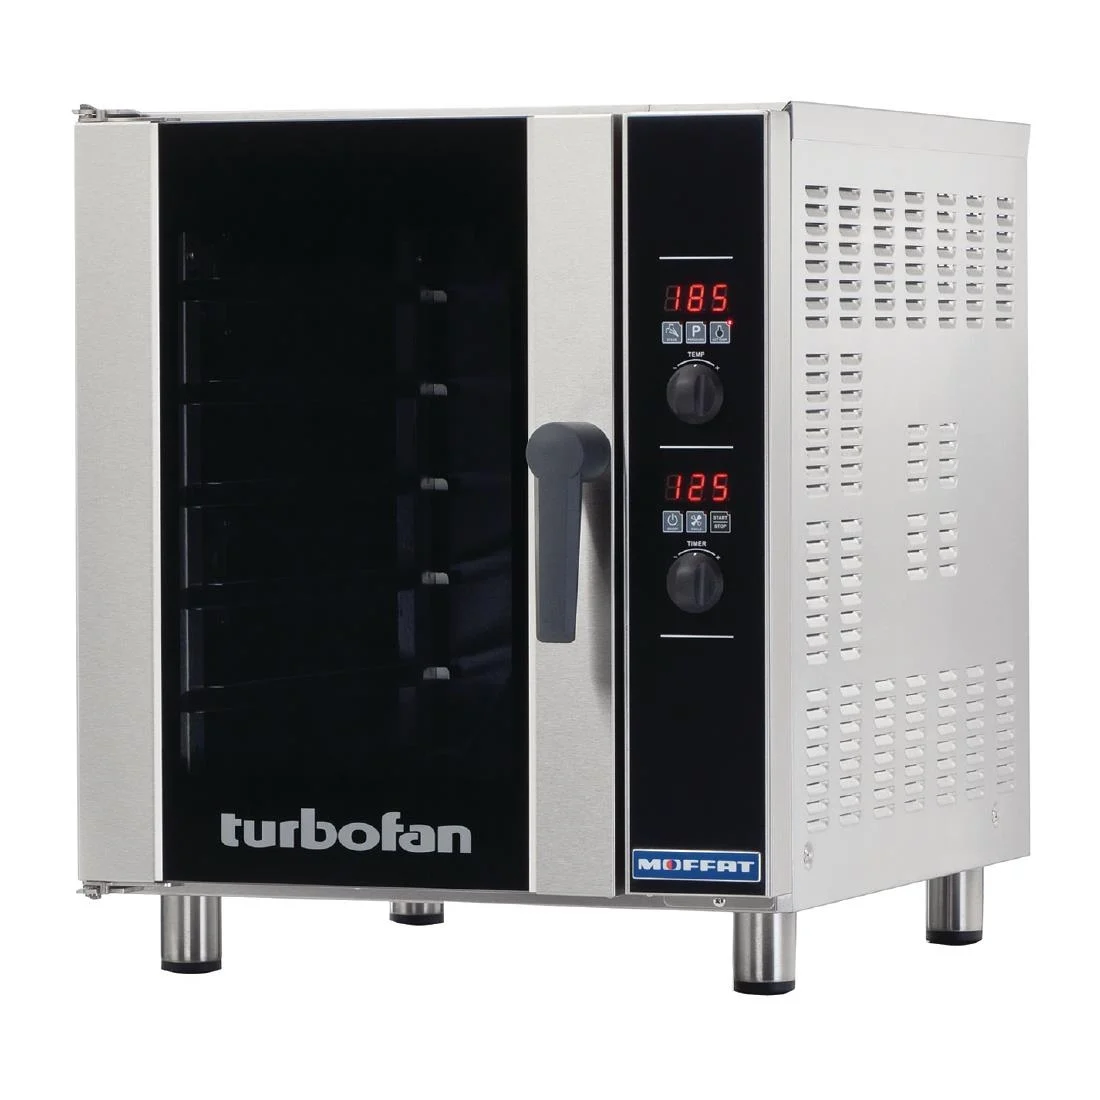 Turbofan E33D5 - Digital Electric Convection Oven